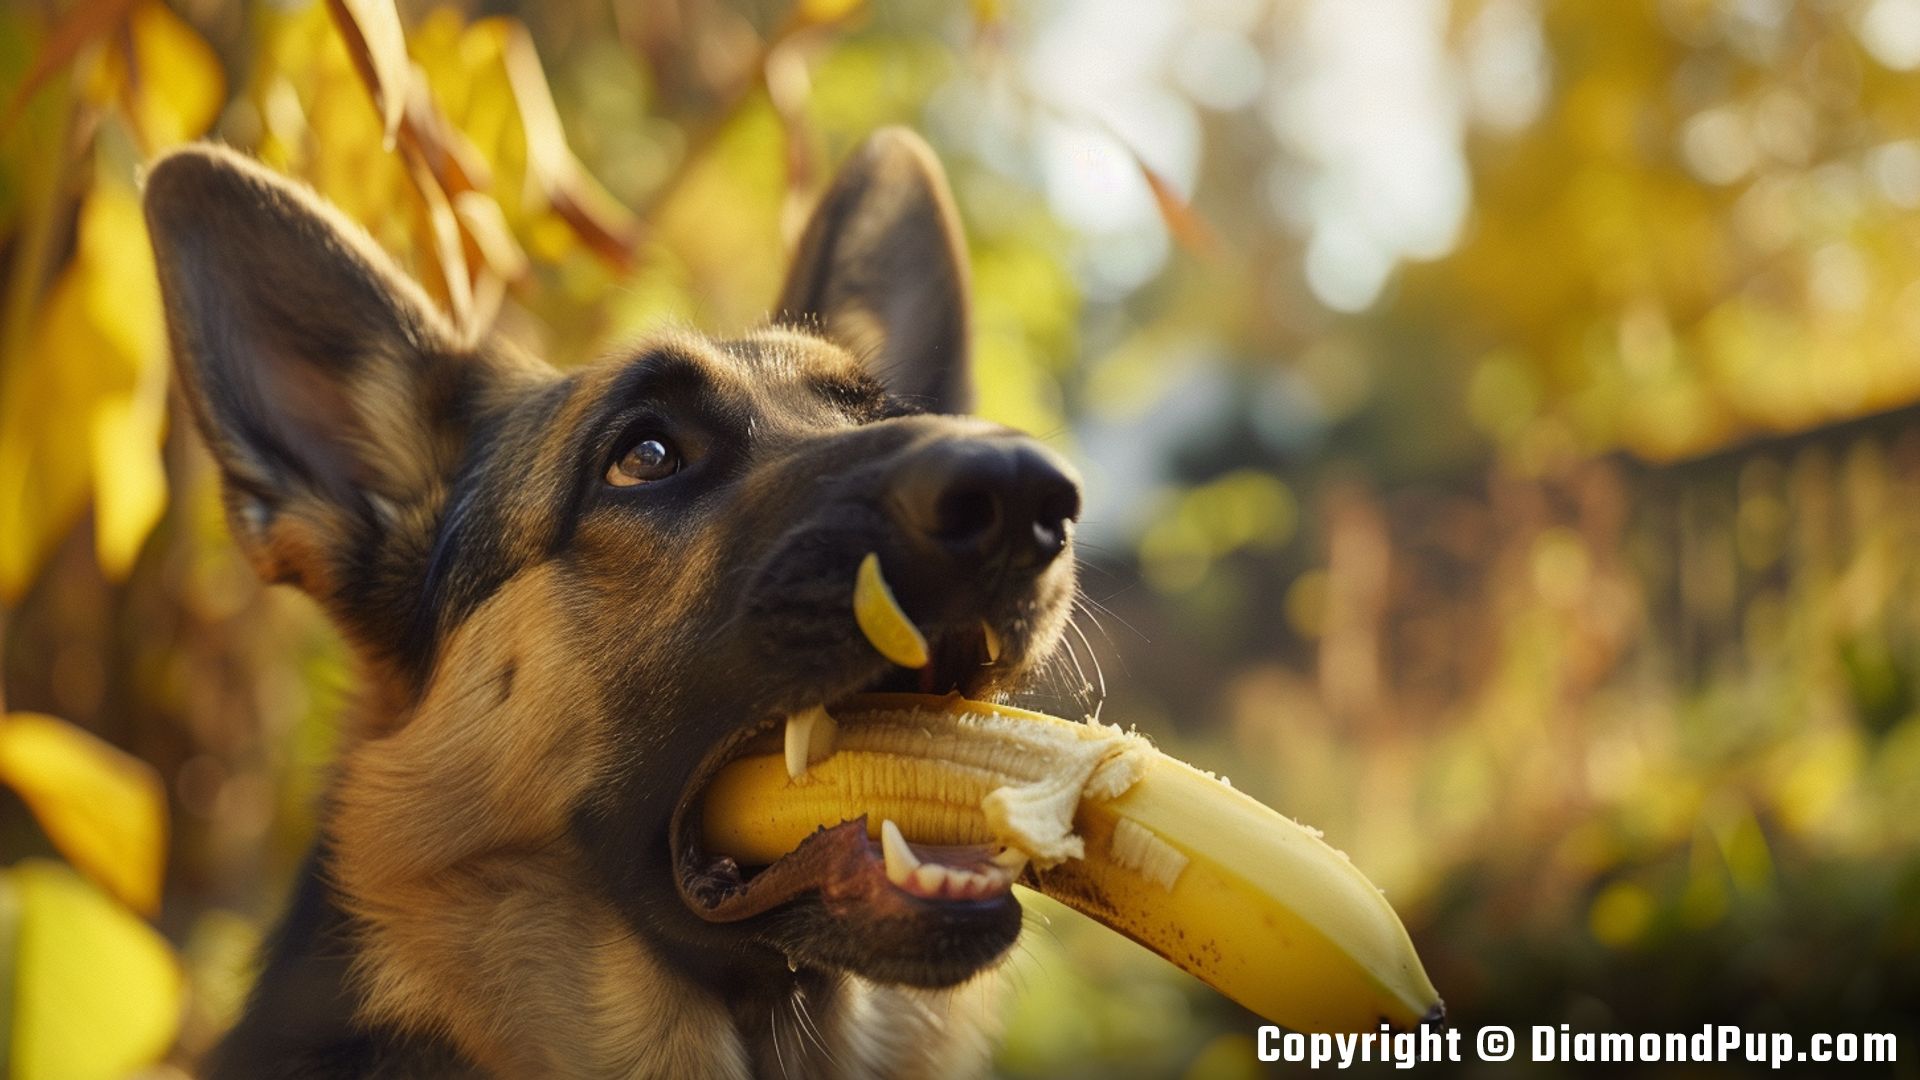 Photo of a Playful German Shepherd Eating Banana